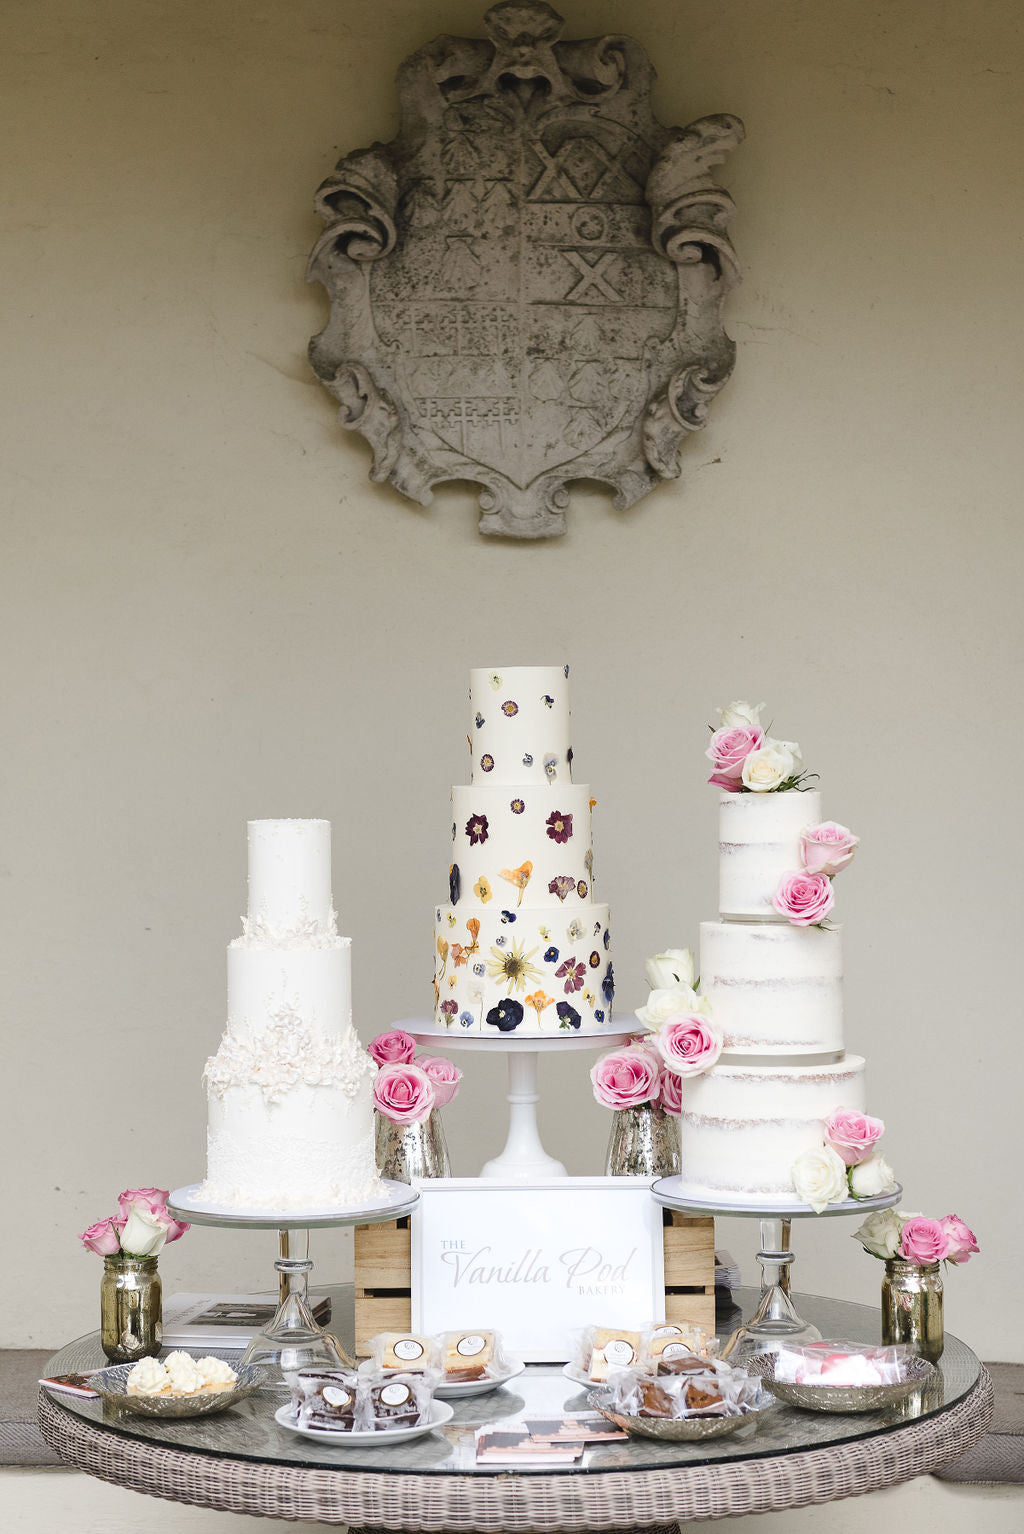 Wedding Showcase at Barnsley House - 3x wedding cakes by the vanilla pod bakery - Image by Weddings By Nicola and Glen